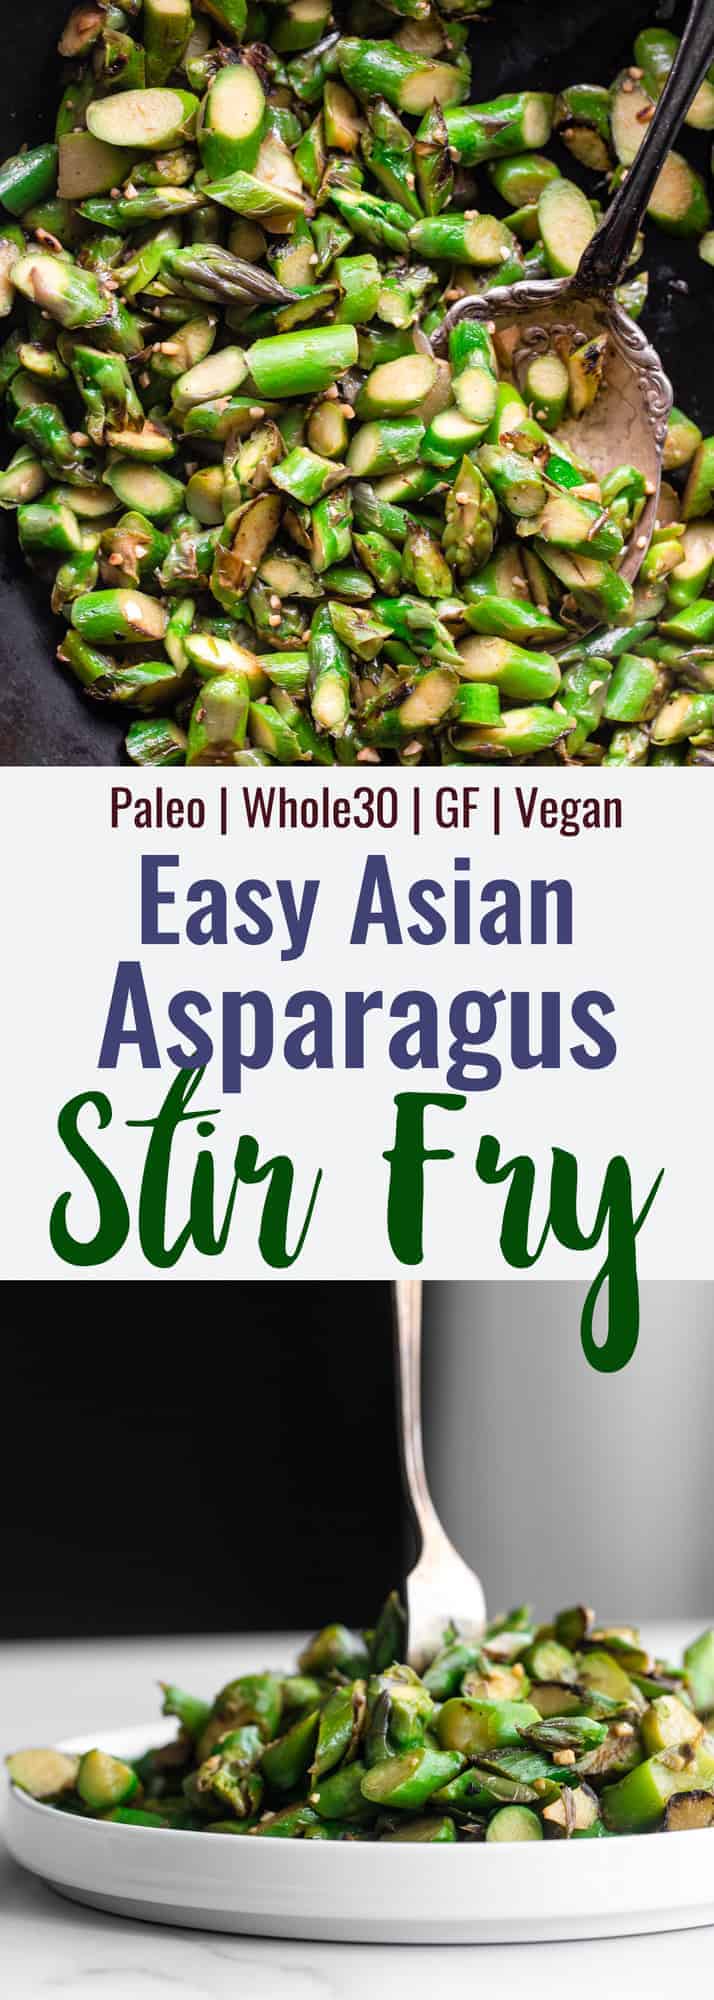 Asparagus Stir Fry collage photo